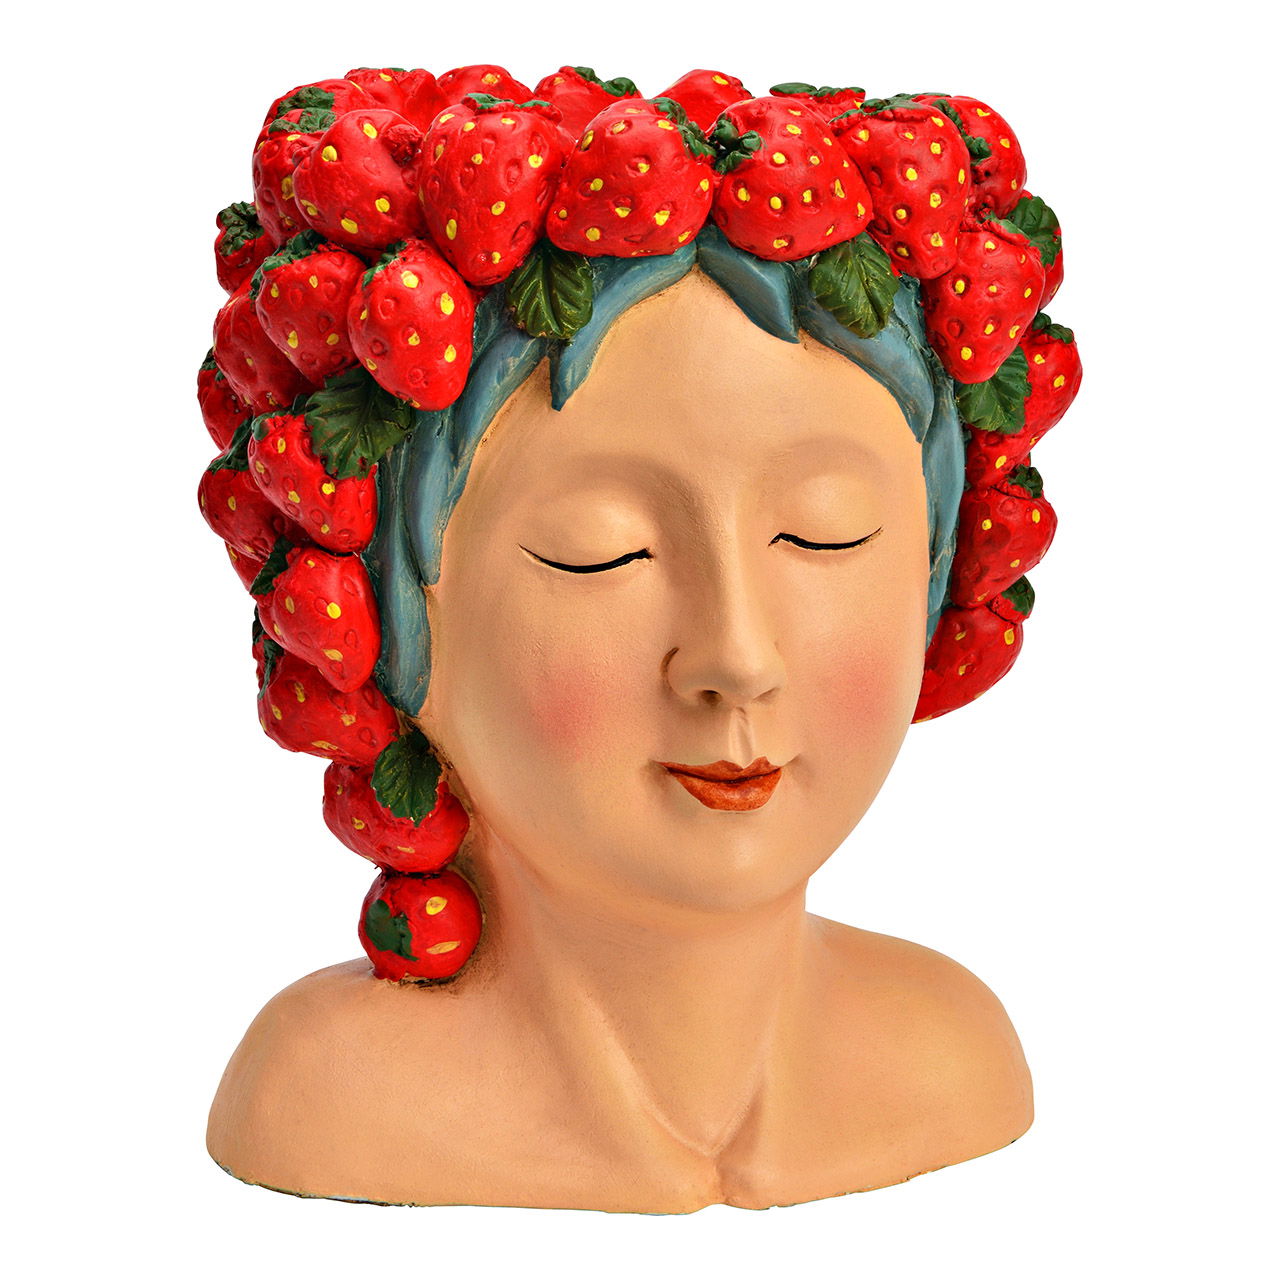 Blumentopf Frauenkopf mit Erdbeeren aus Magnesia, Rosa/Rot (B/H/T) 22x28x21cm